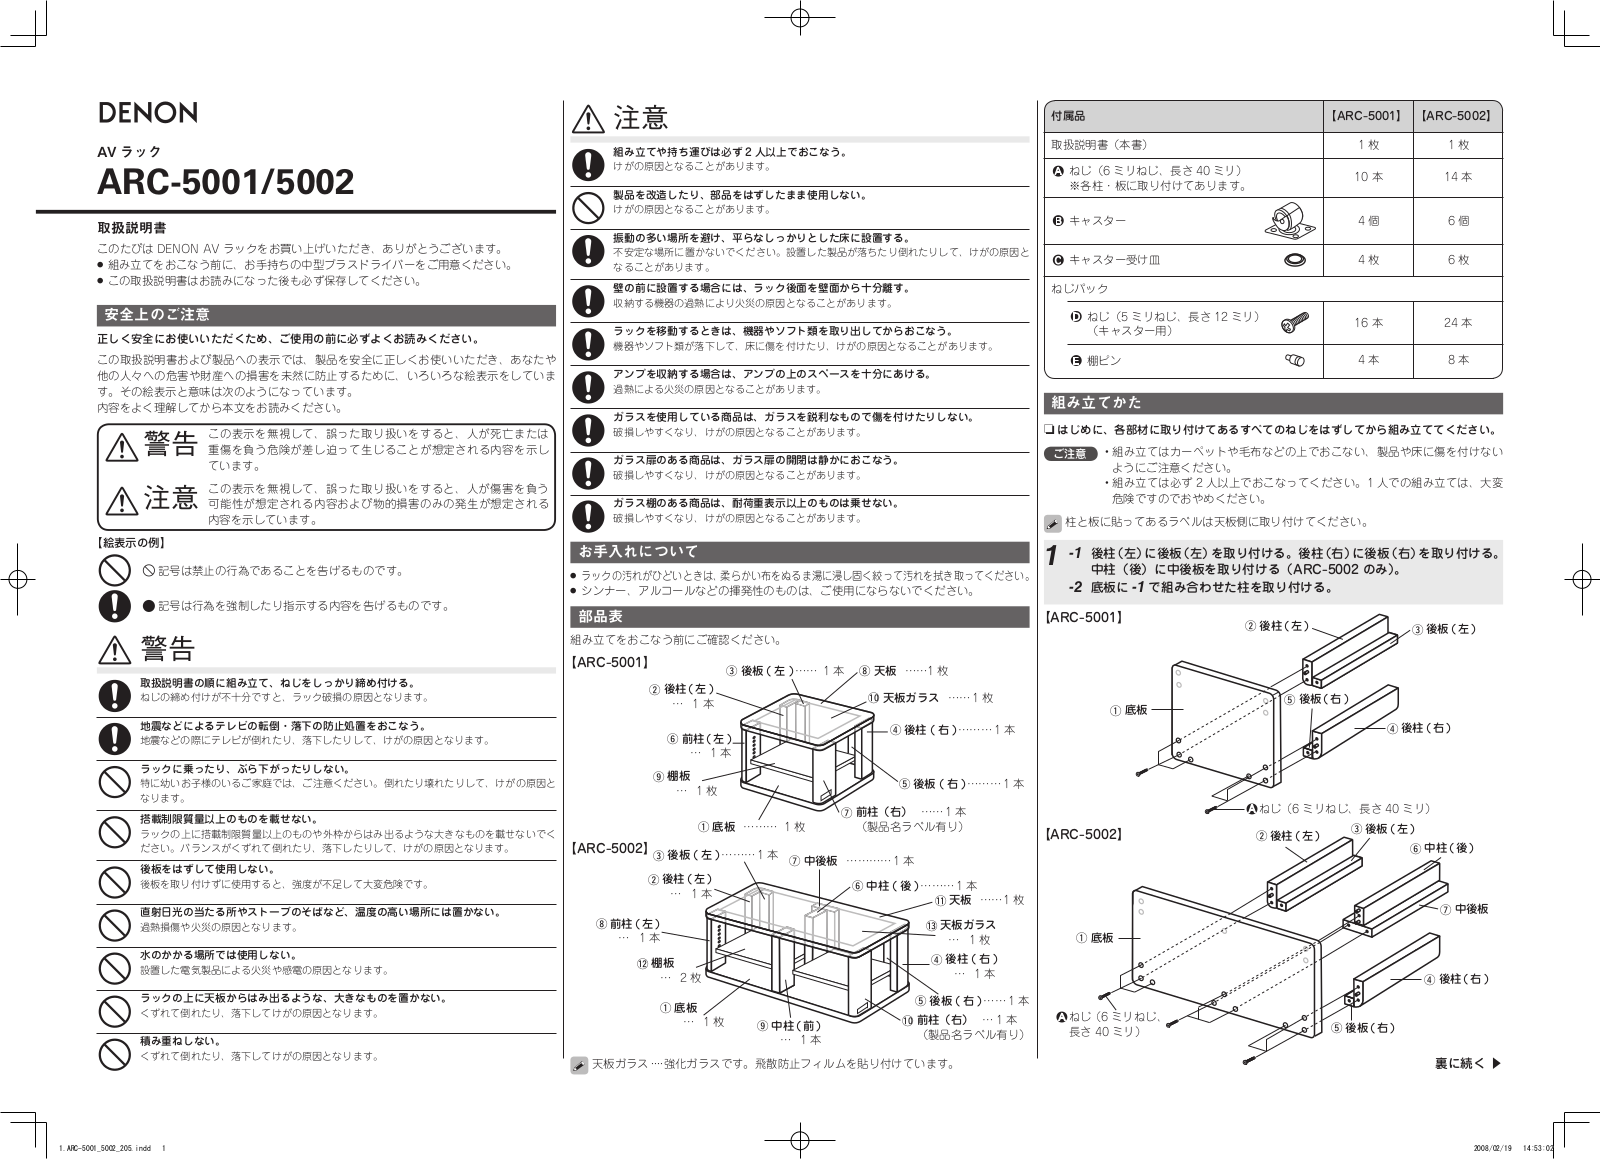 Denon ARC-5002, ARC-5001 Owner's Manual